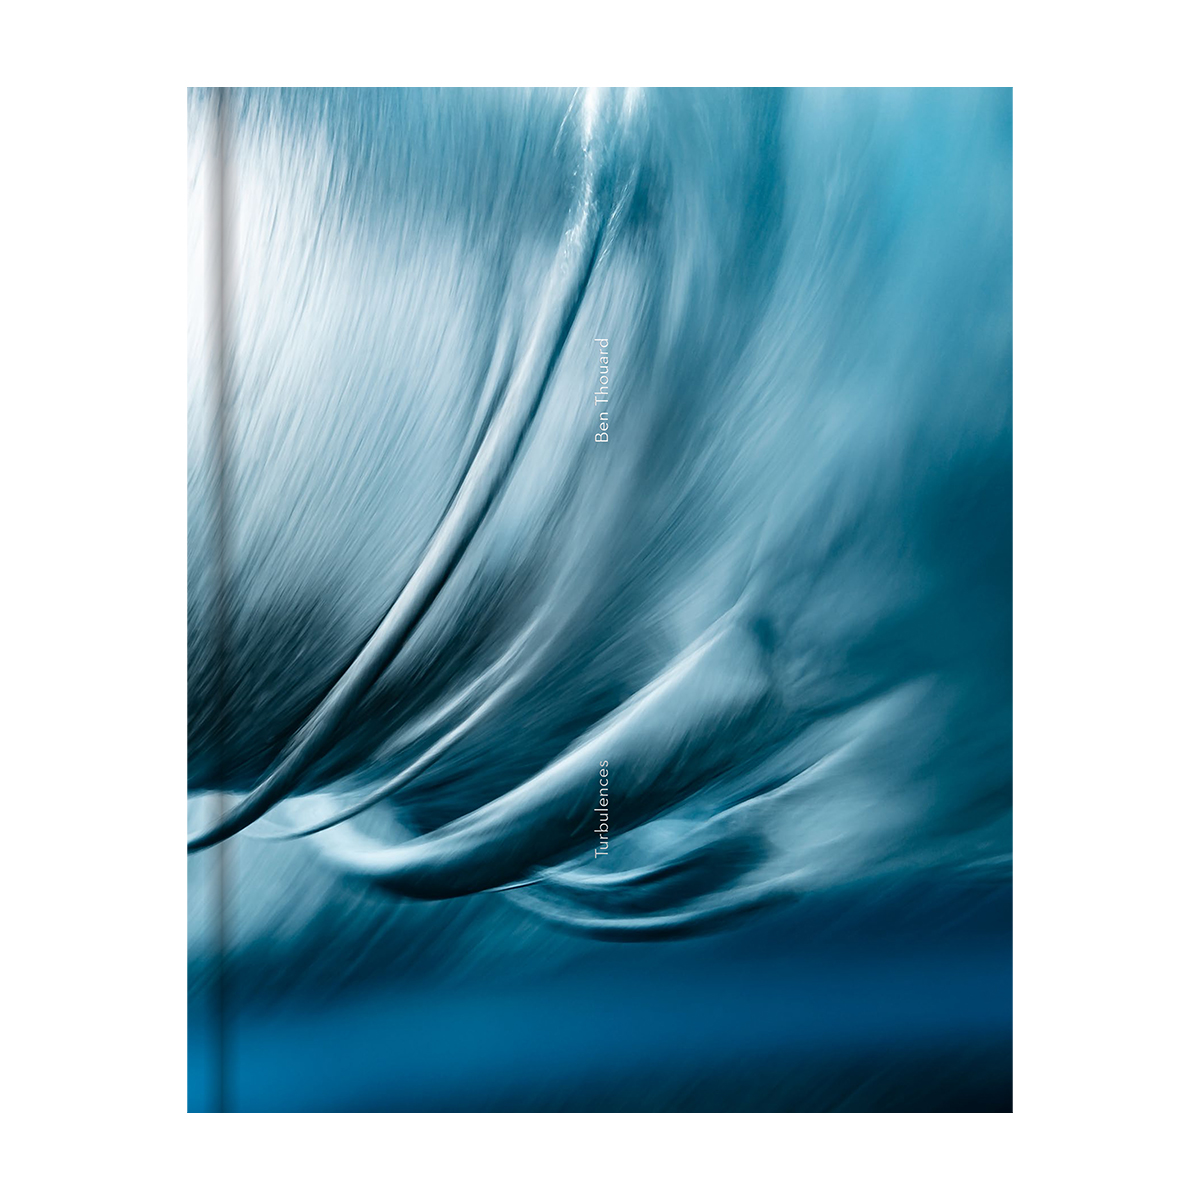 turbulences - Turbulences by Ben Thouard